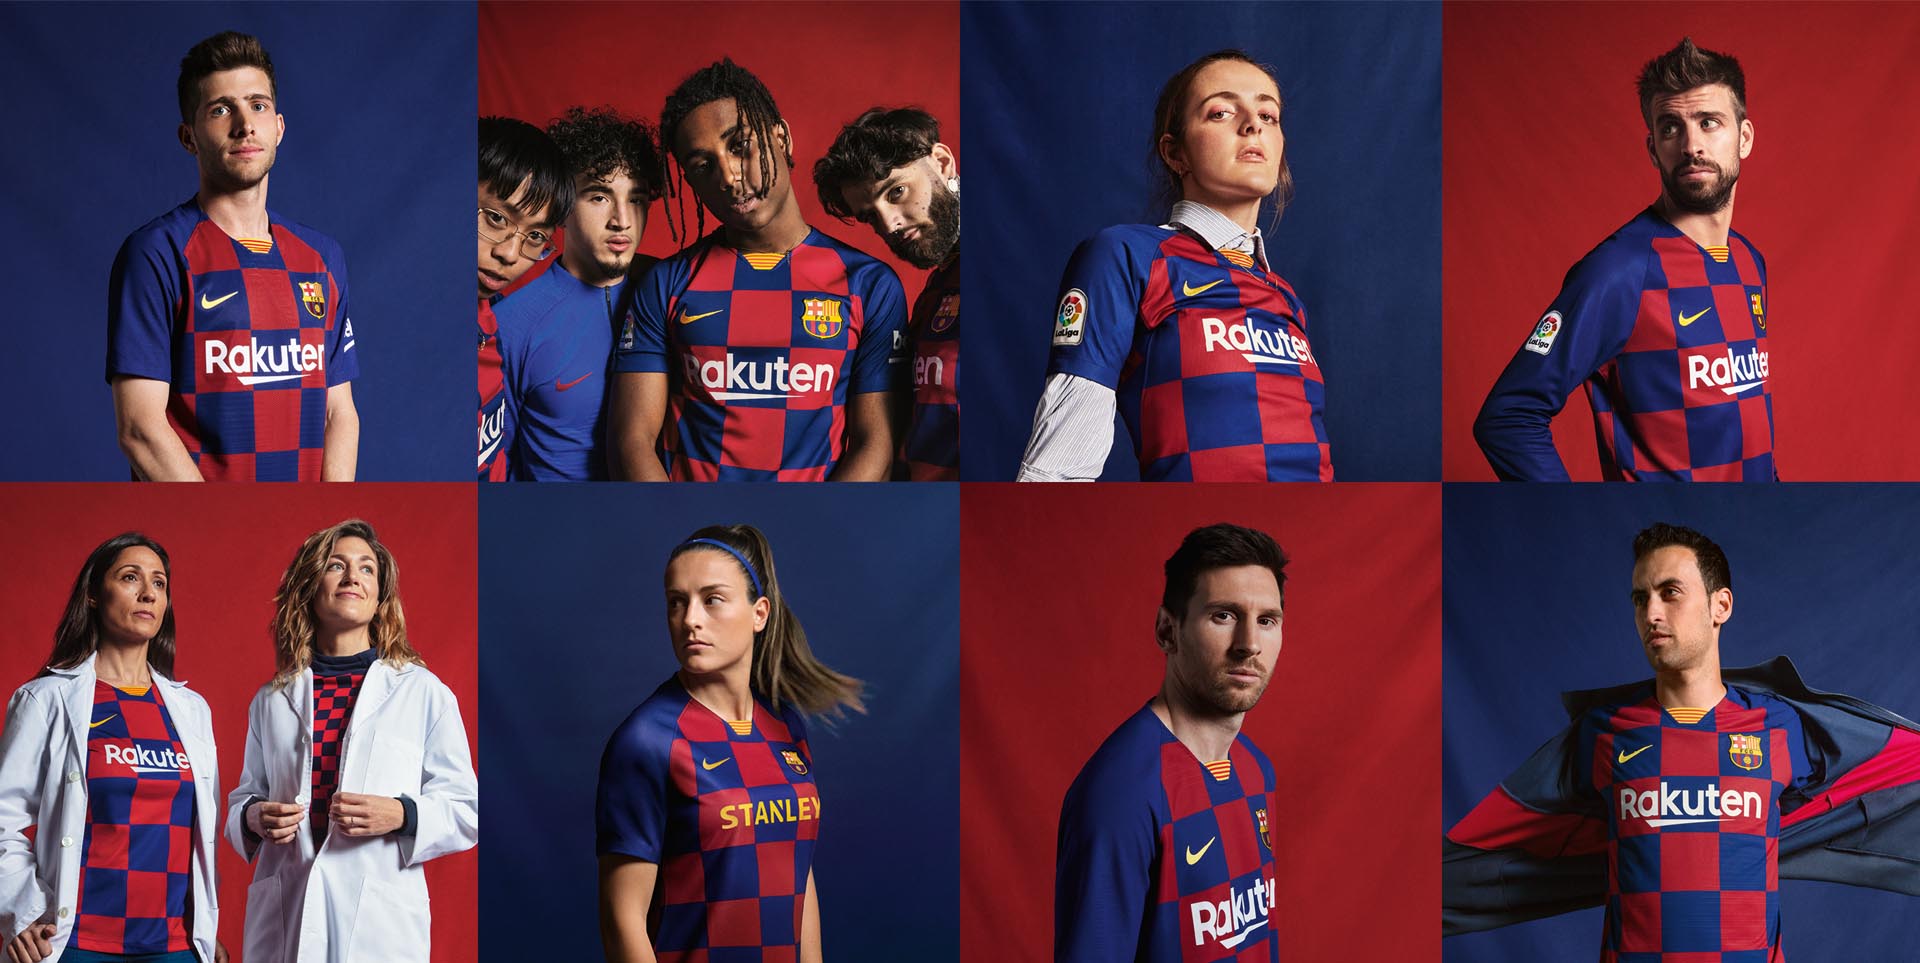 filosofie in tegenstelling tot kloof Barcelona thuisshirt 2019-2020 - Voetbalshirts.com